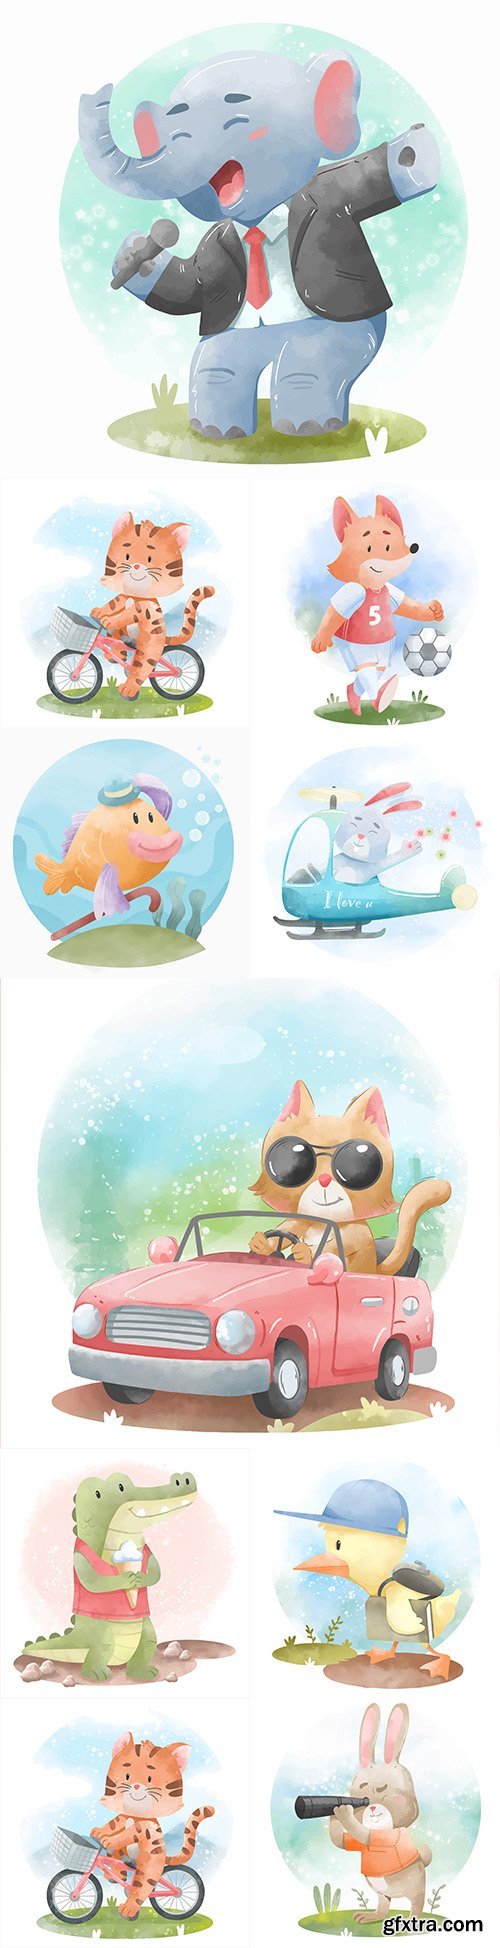 Cute cartoon animals’ watercolor illustrations 6